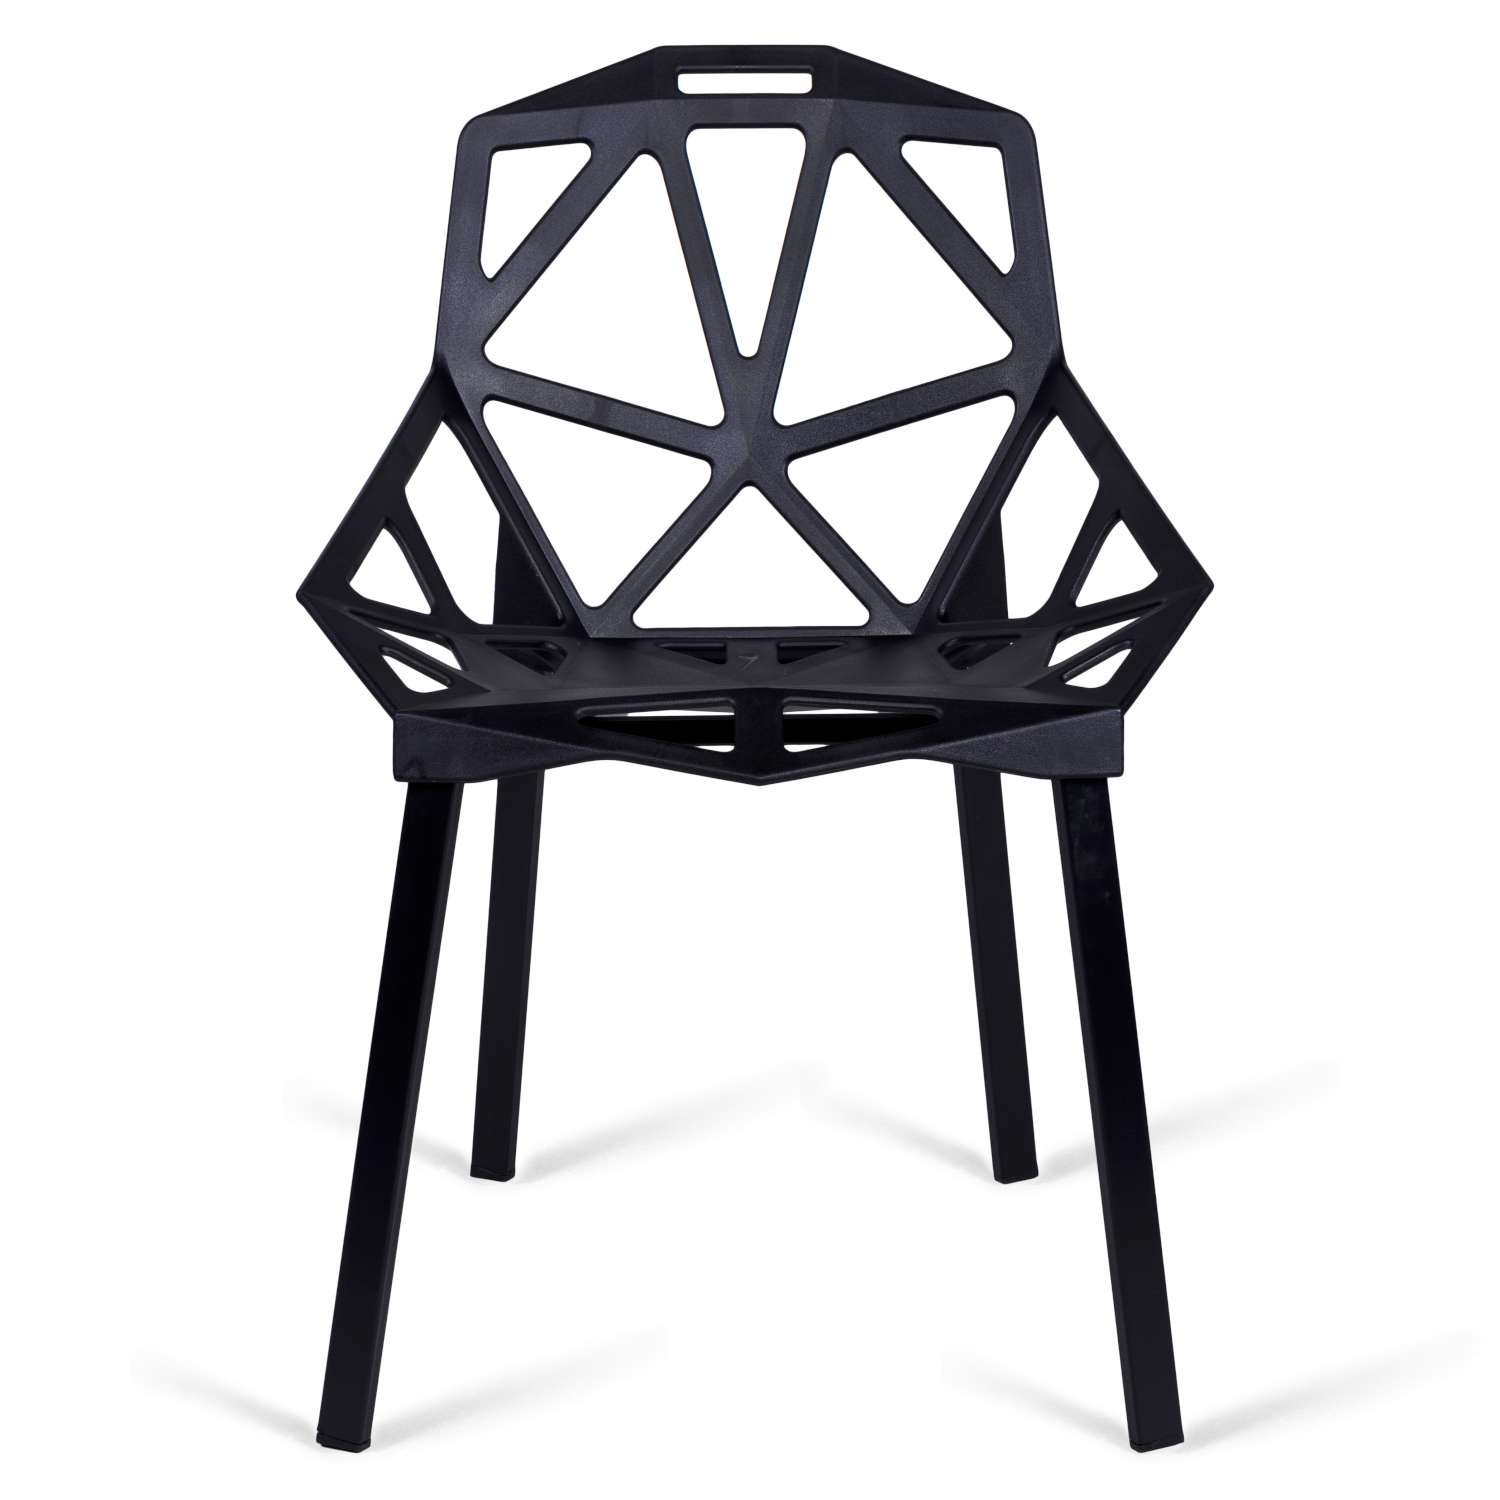 Krzesło ażurowe VECTOR czarne